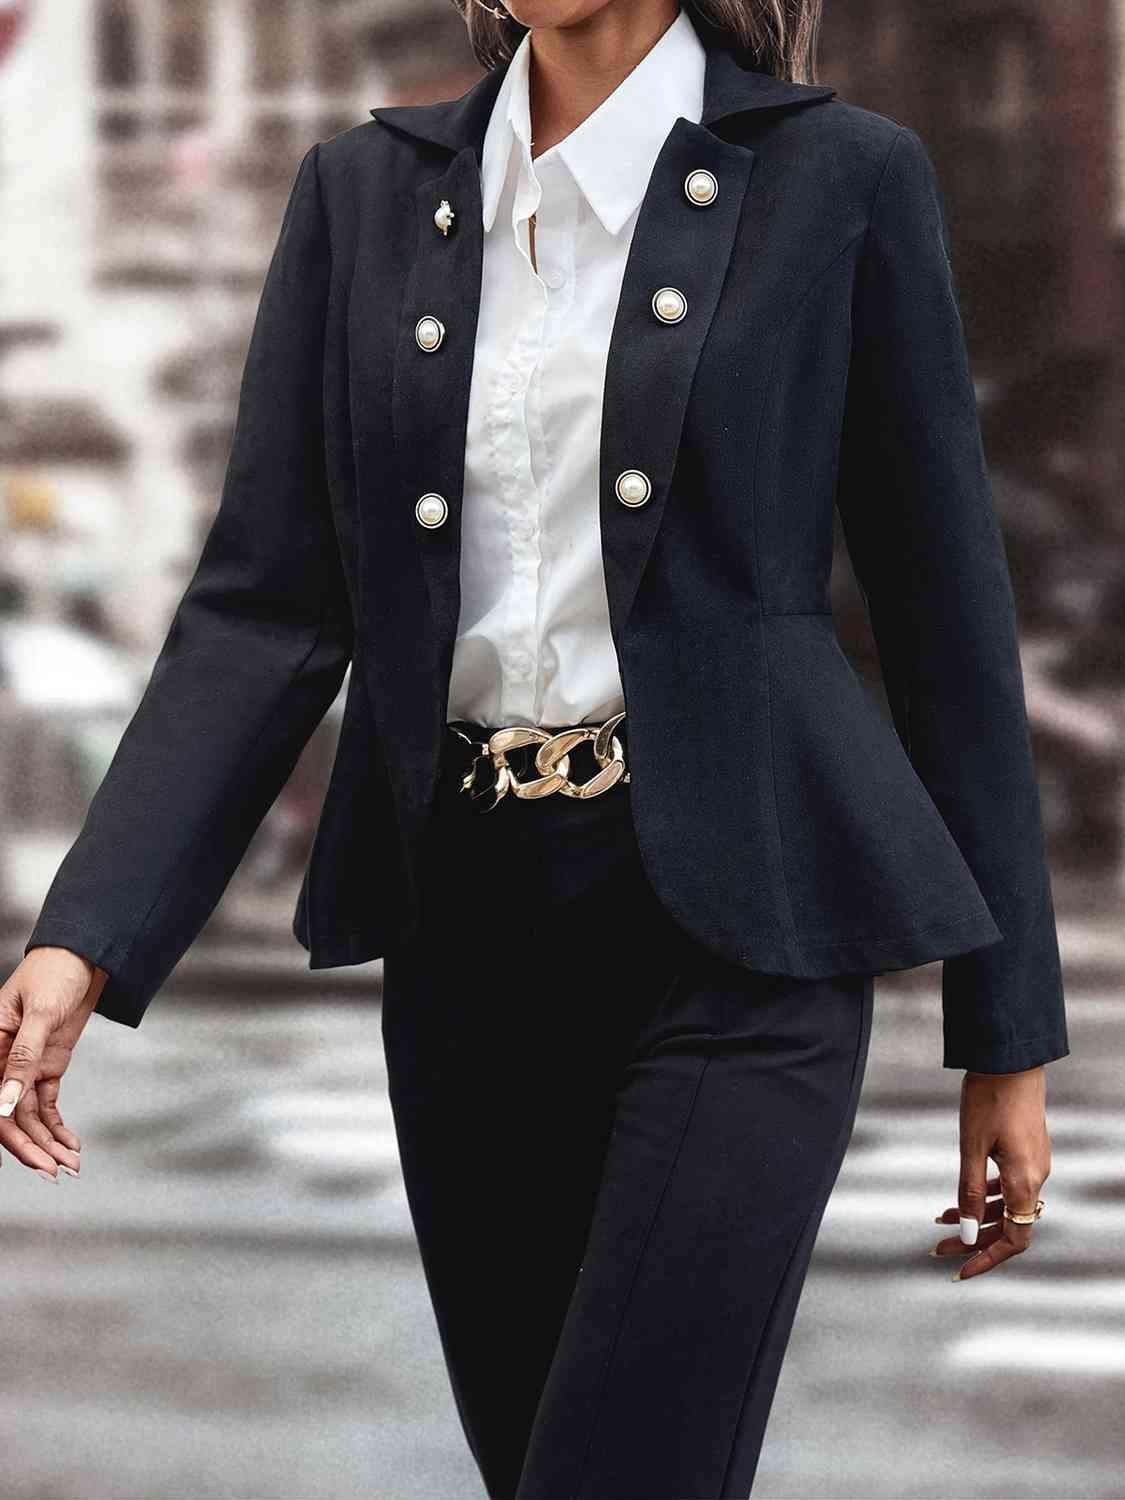 a woman walking down a street in a suit